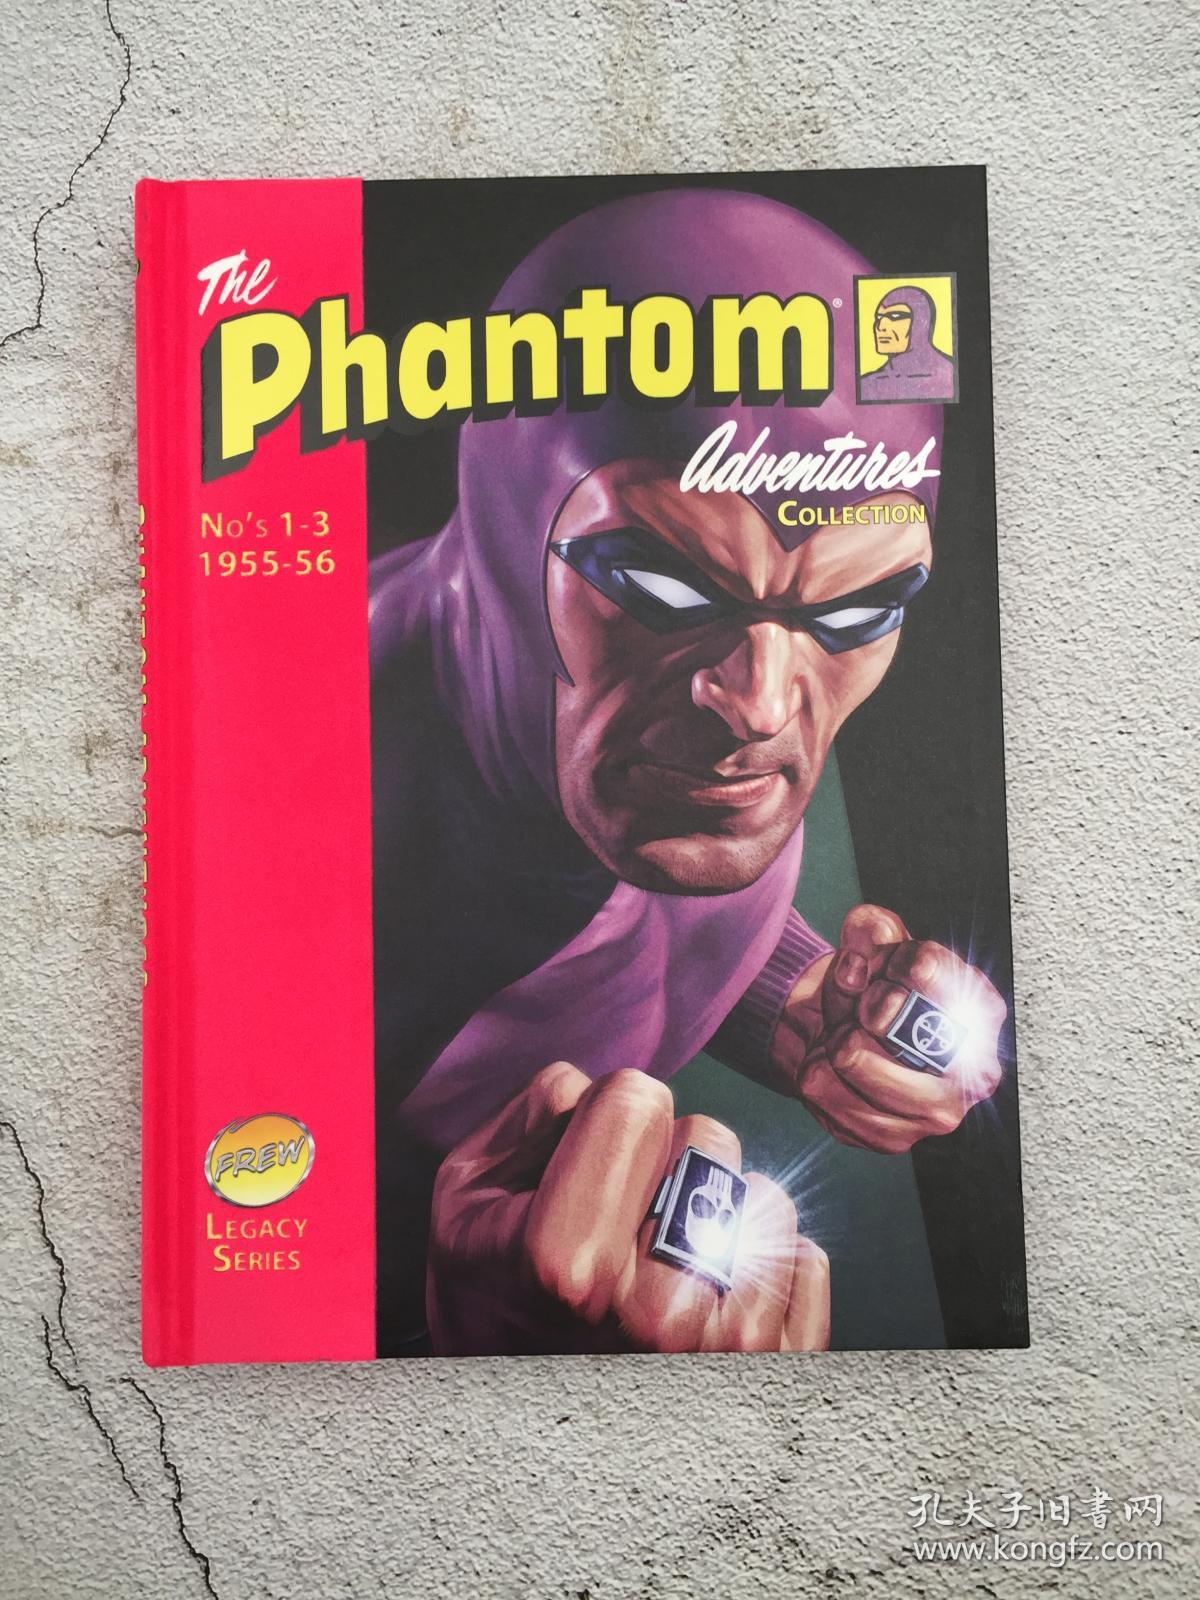 the phantom adventures collection